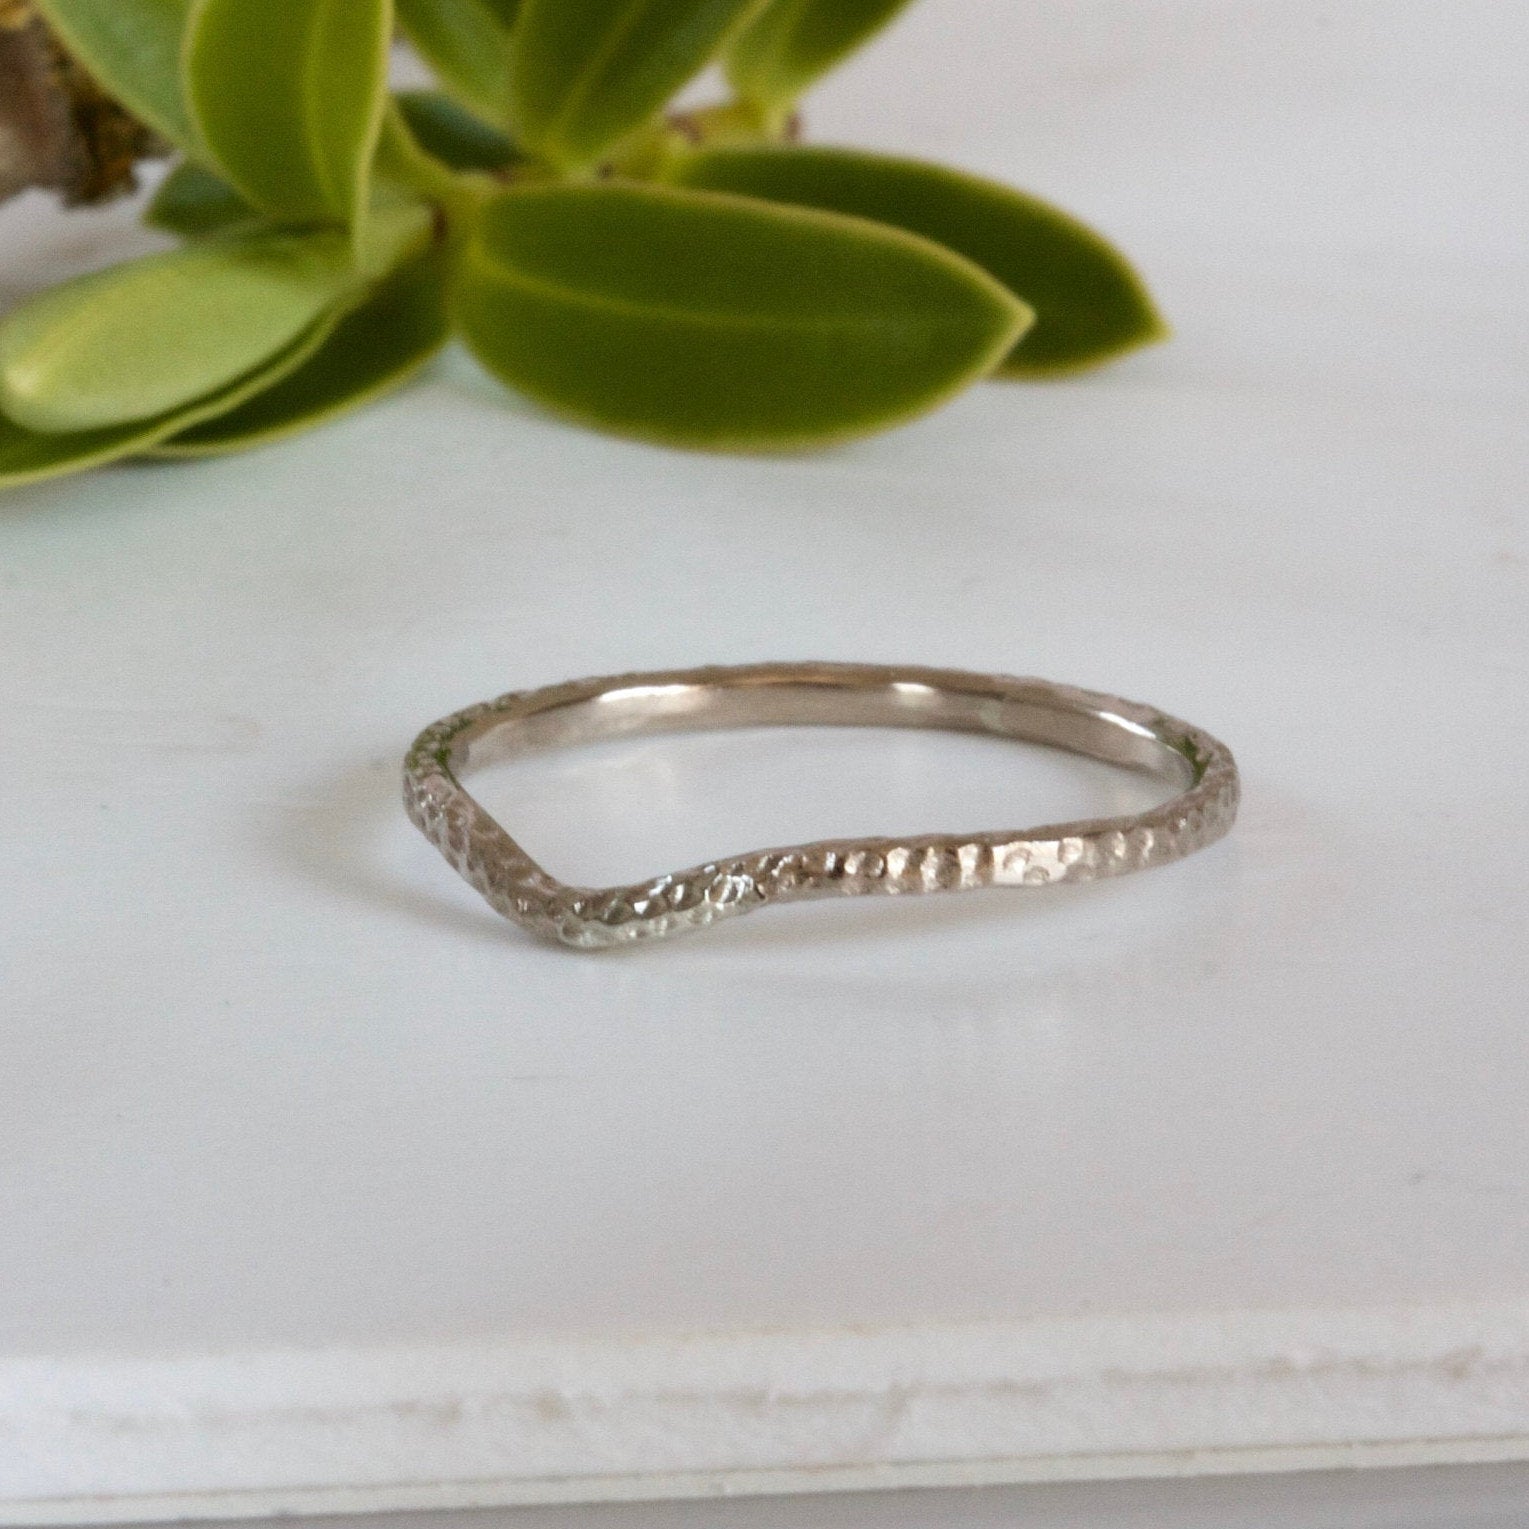 Thin 18ct gold handmade wedding ring